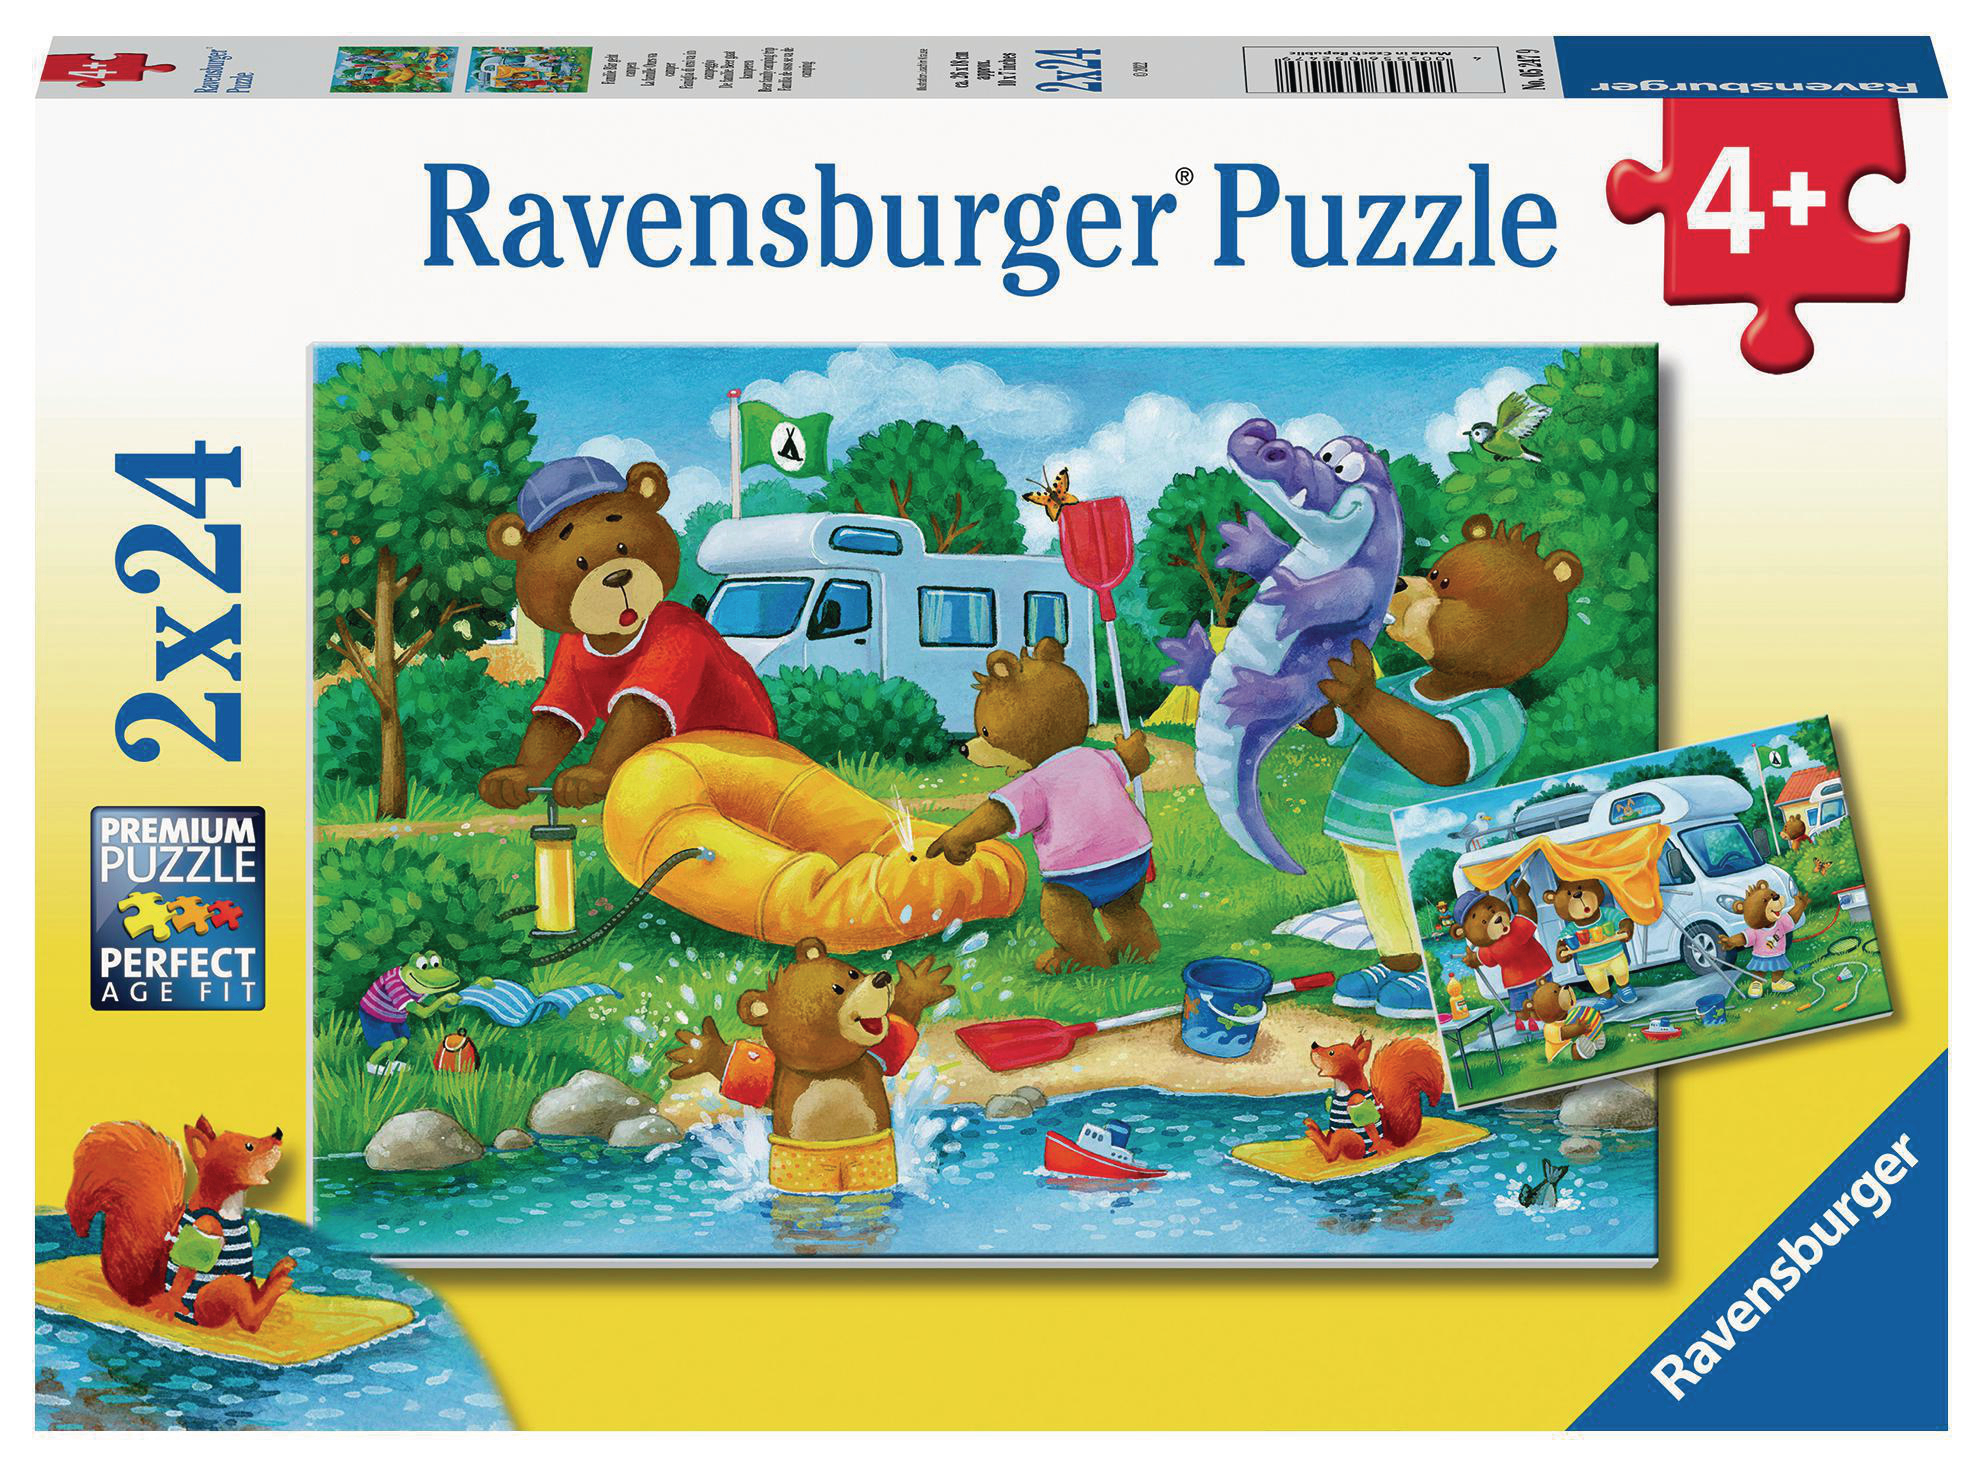 RAVENSBURGER 05247 Familie Puzzle geht Bär campen Mehrfarbig